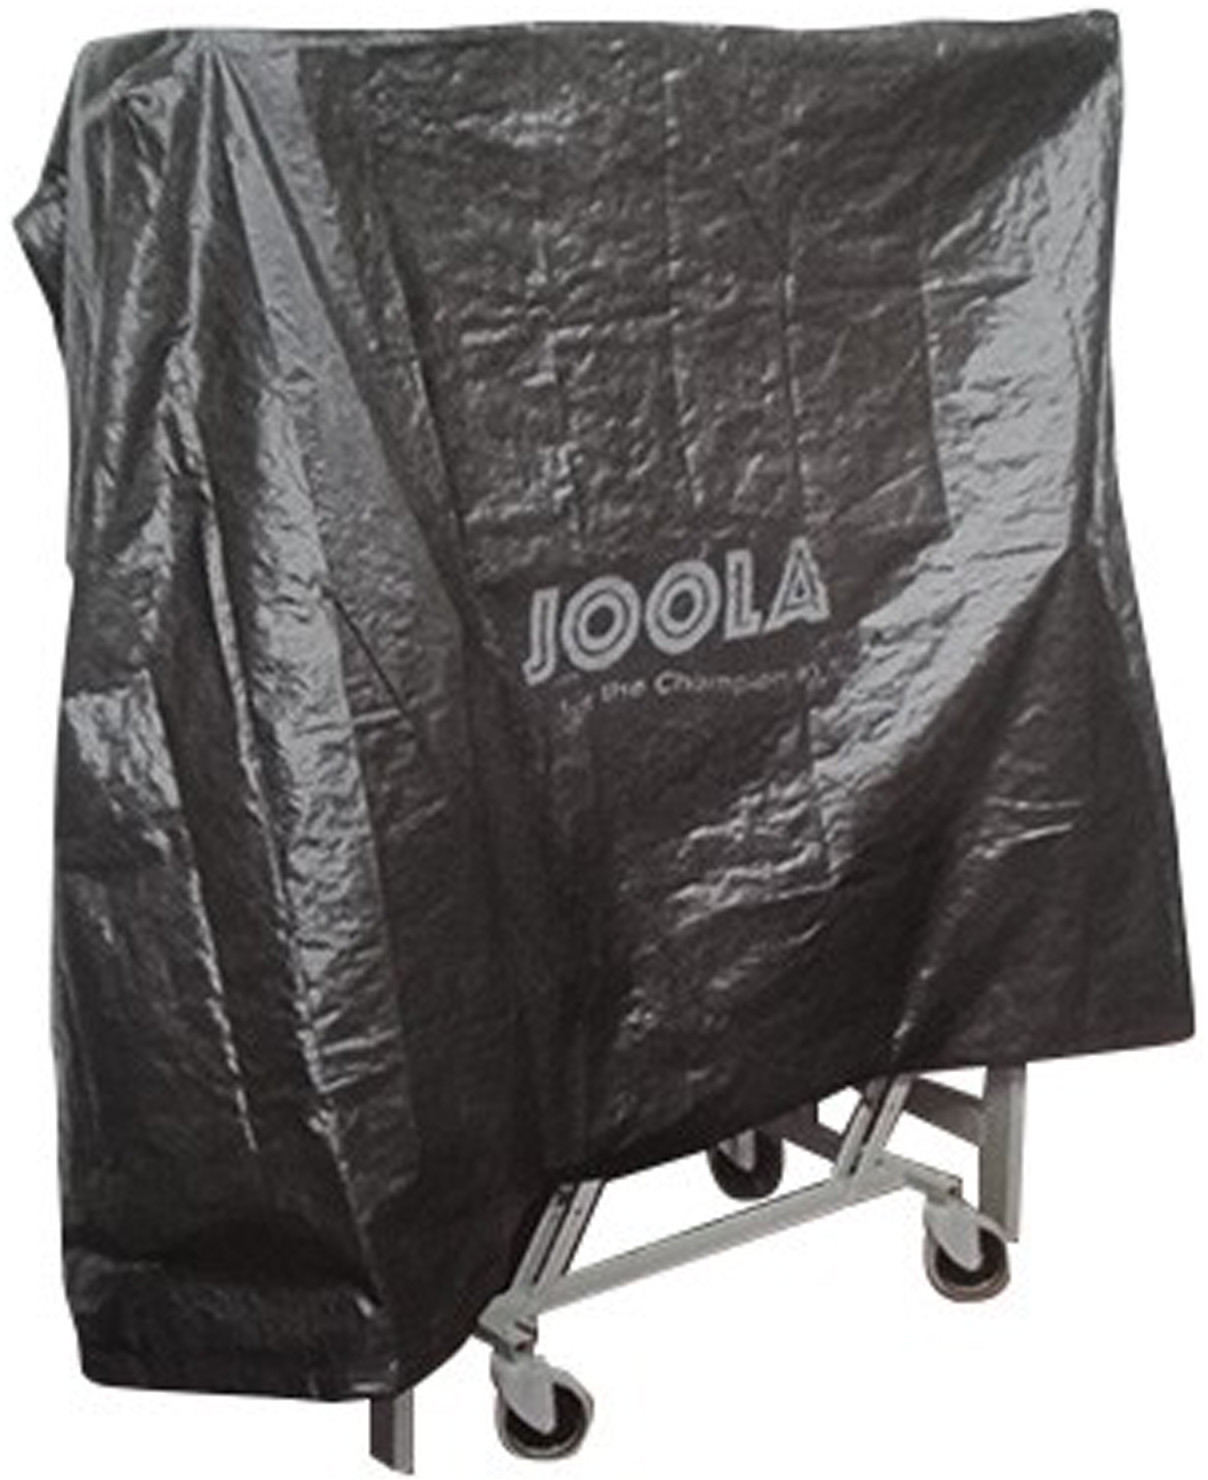 Joola Table Cover 29,50 bei | (JO19900) Preisvergleich € ab